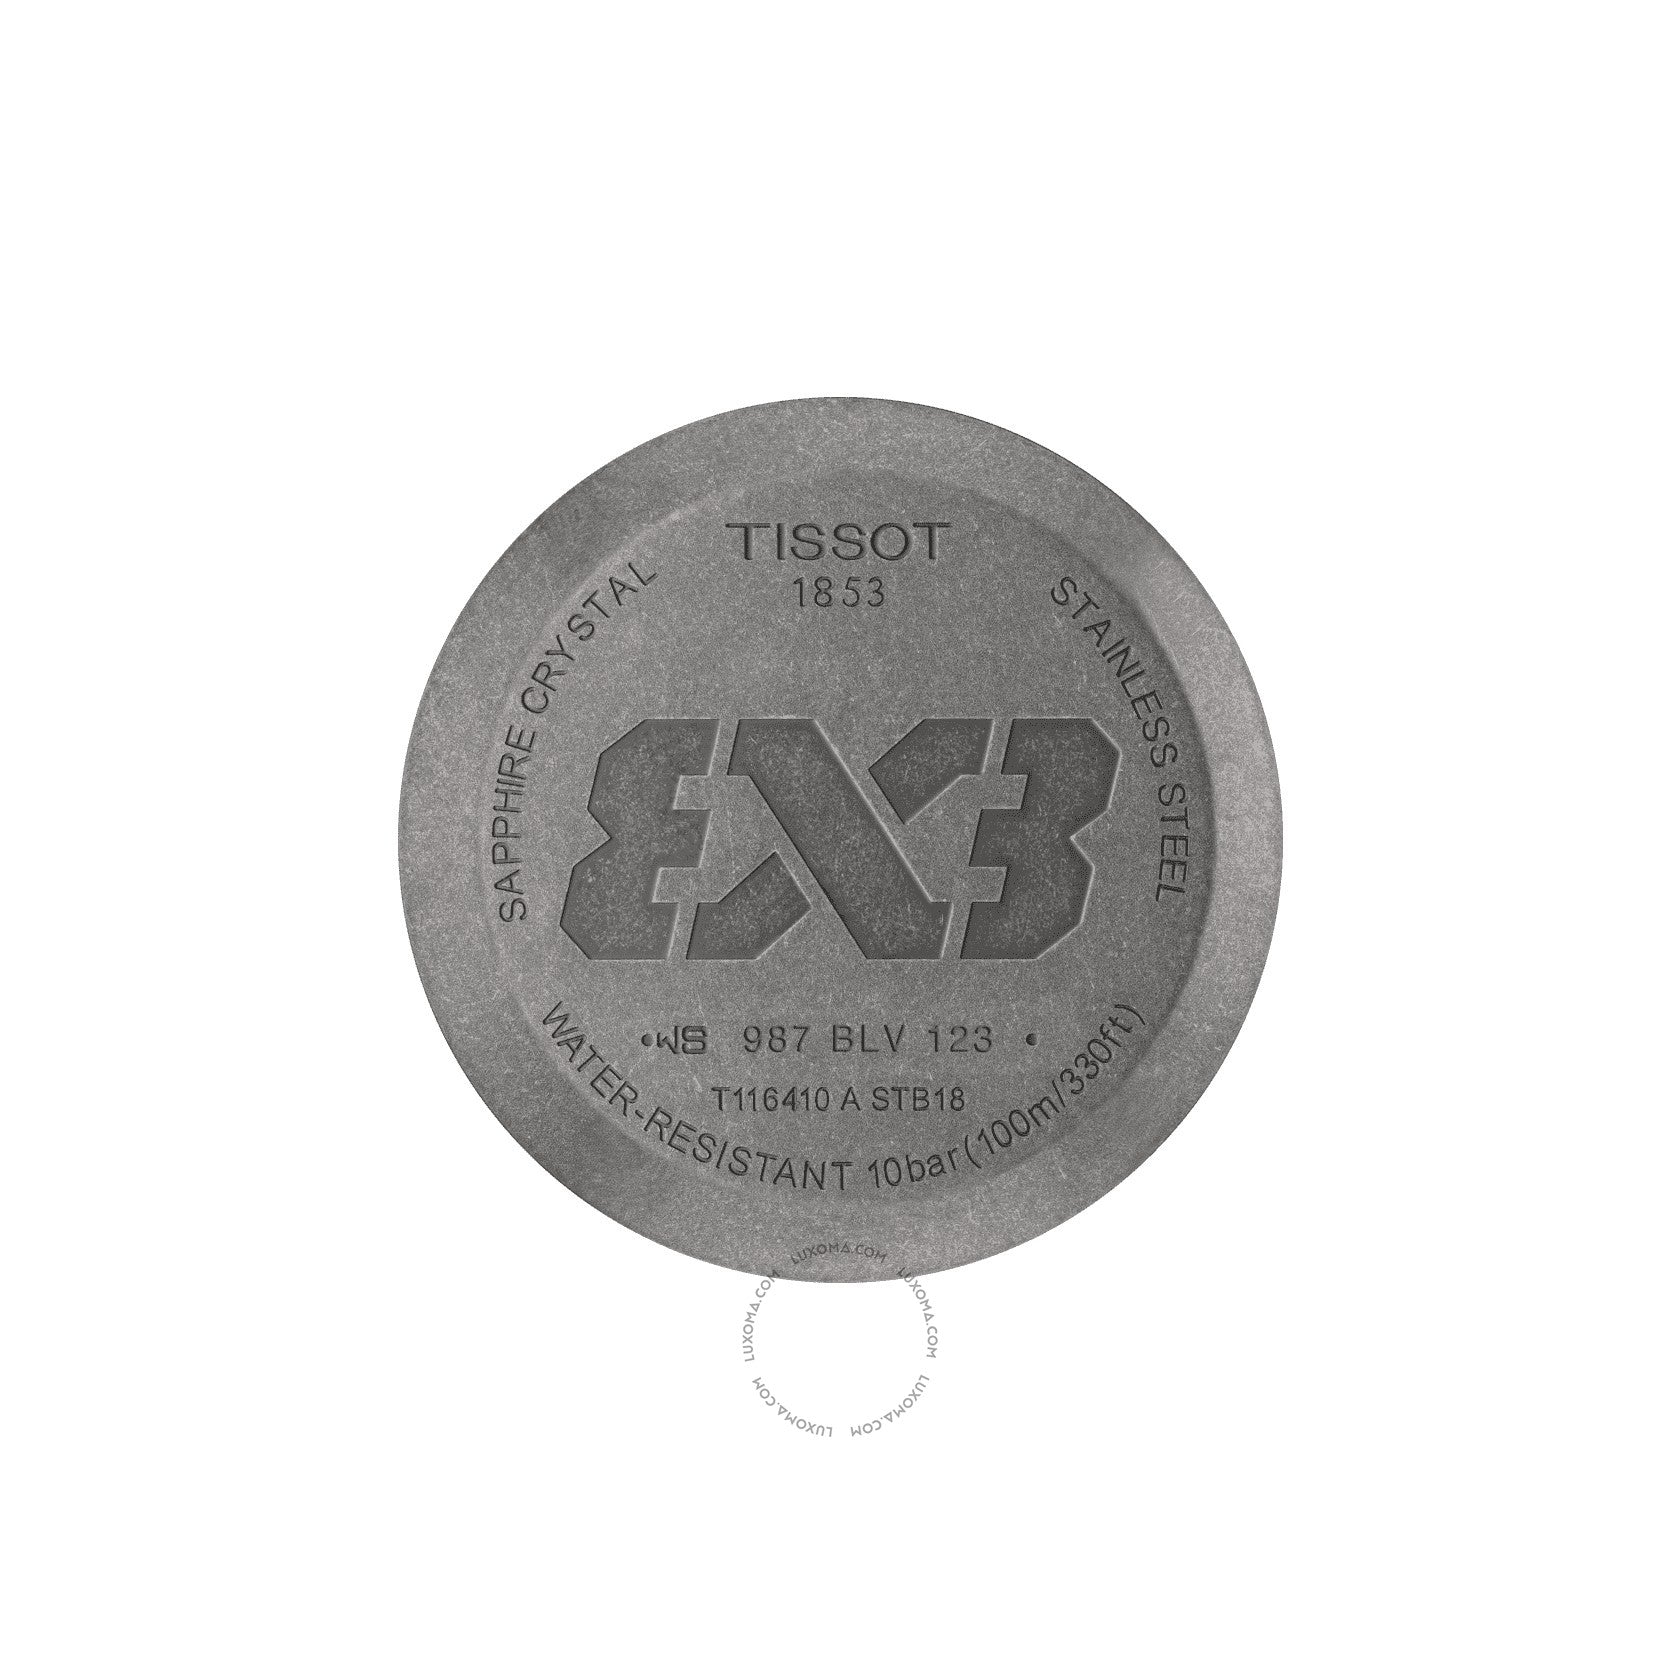 Tissot Tissot 3X3 Street Basketball Quartz Anthracite Dial Men's Watch T116.410.36.067.00